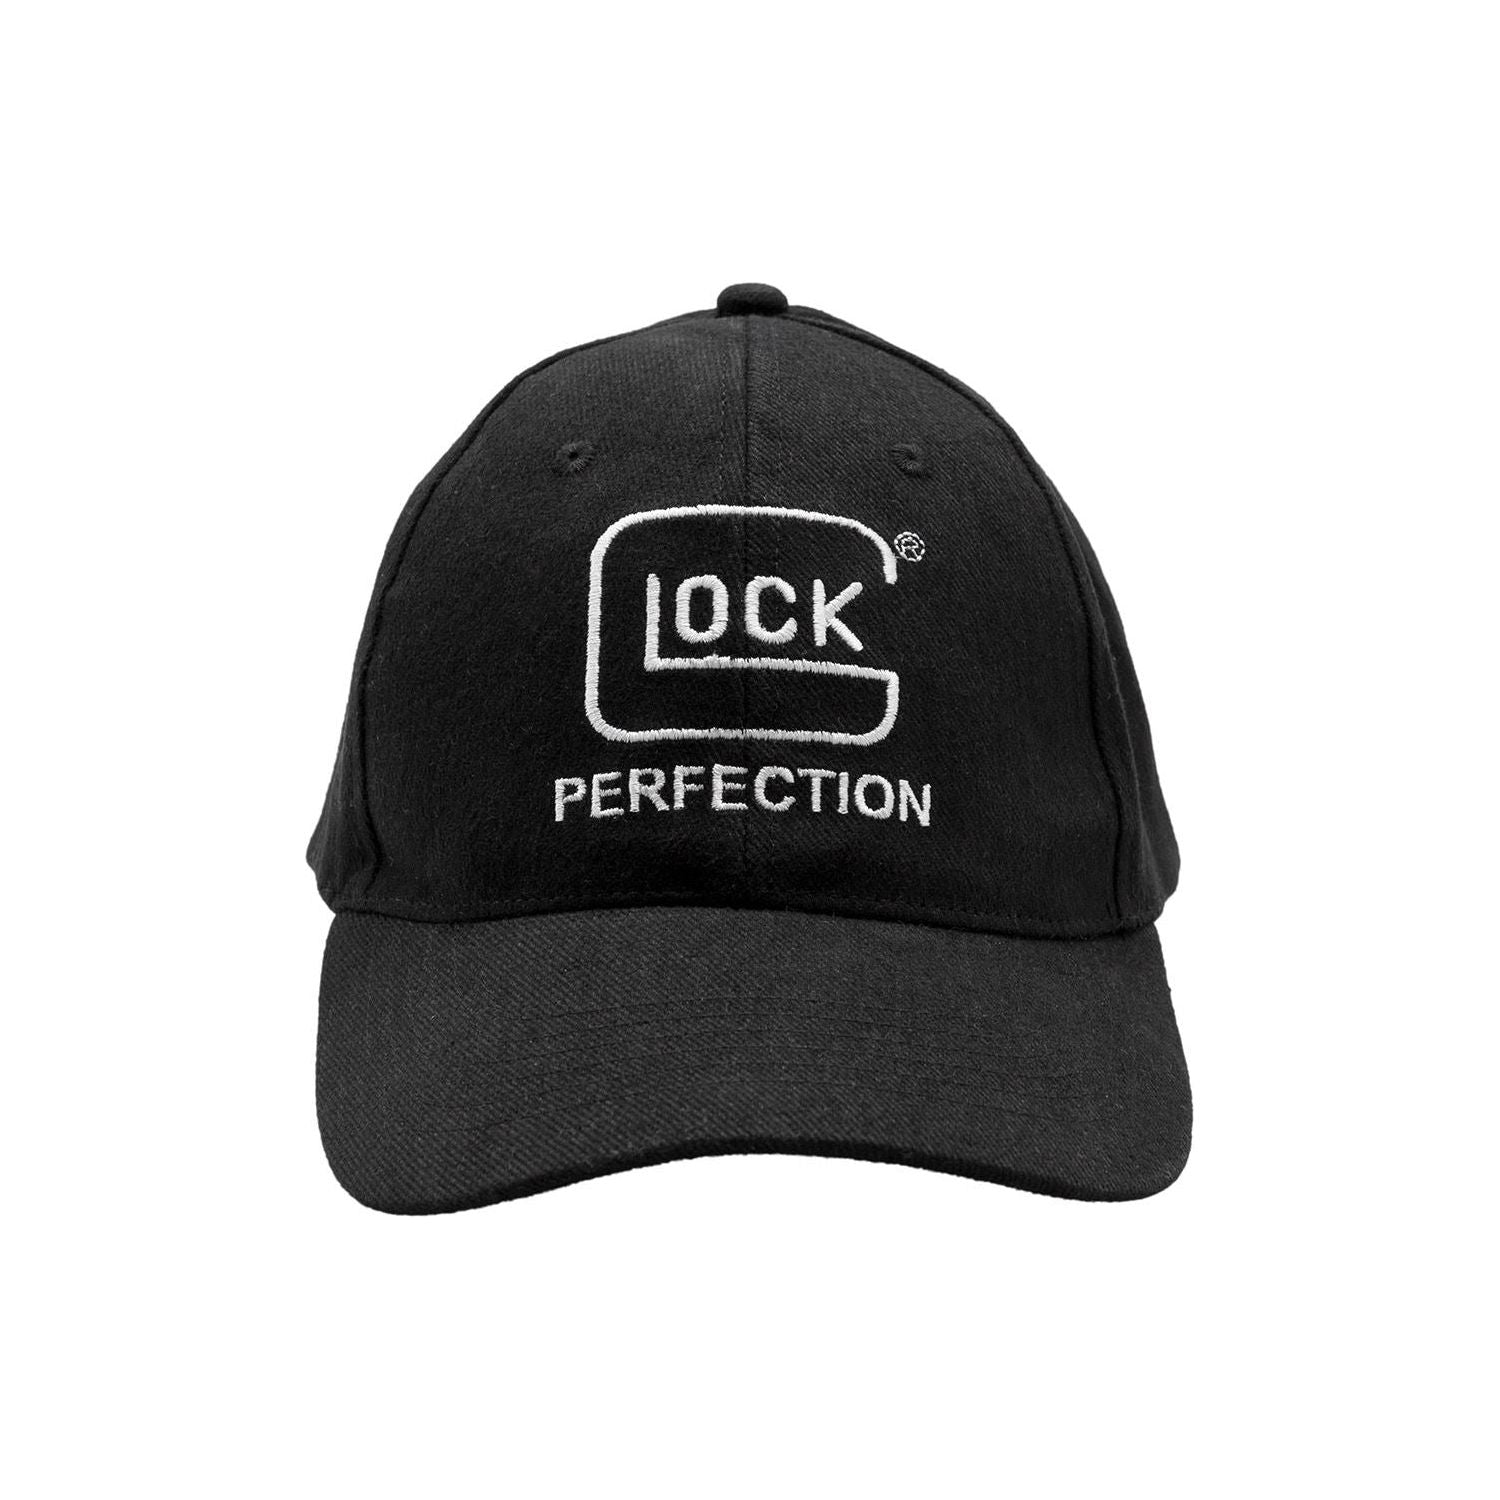 Glock Perfection Cap Svart